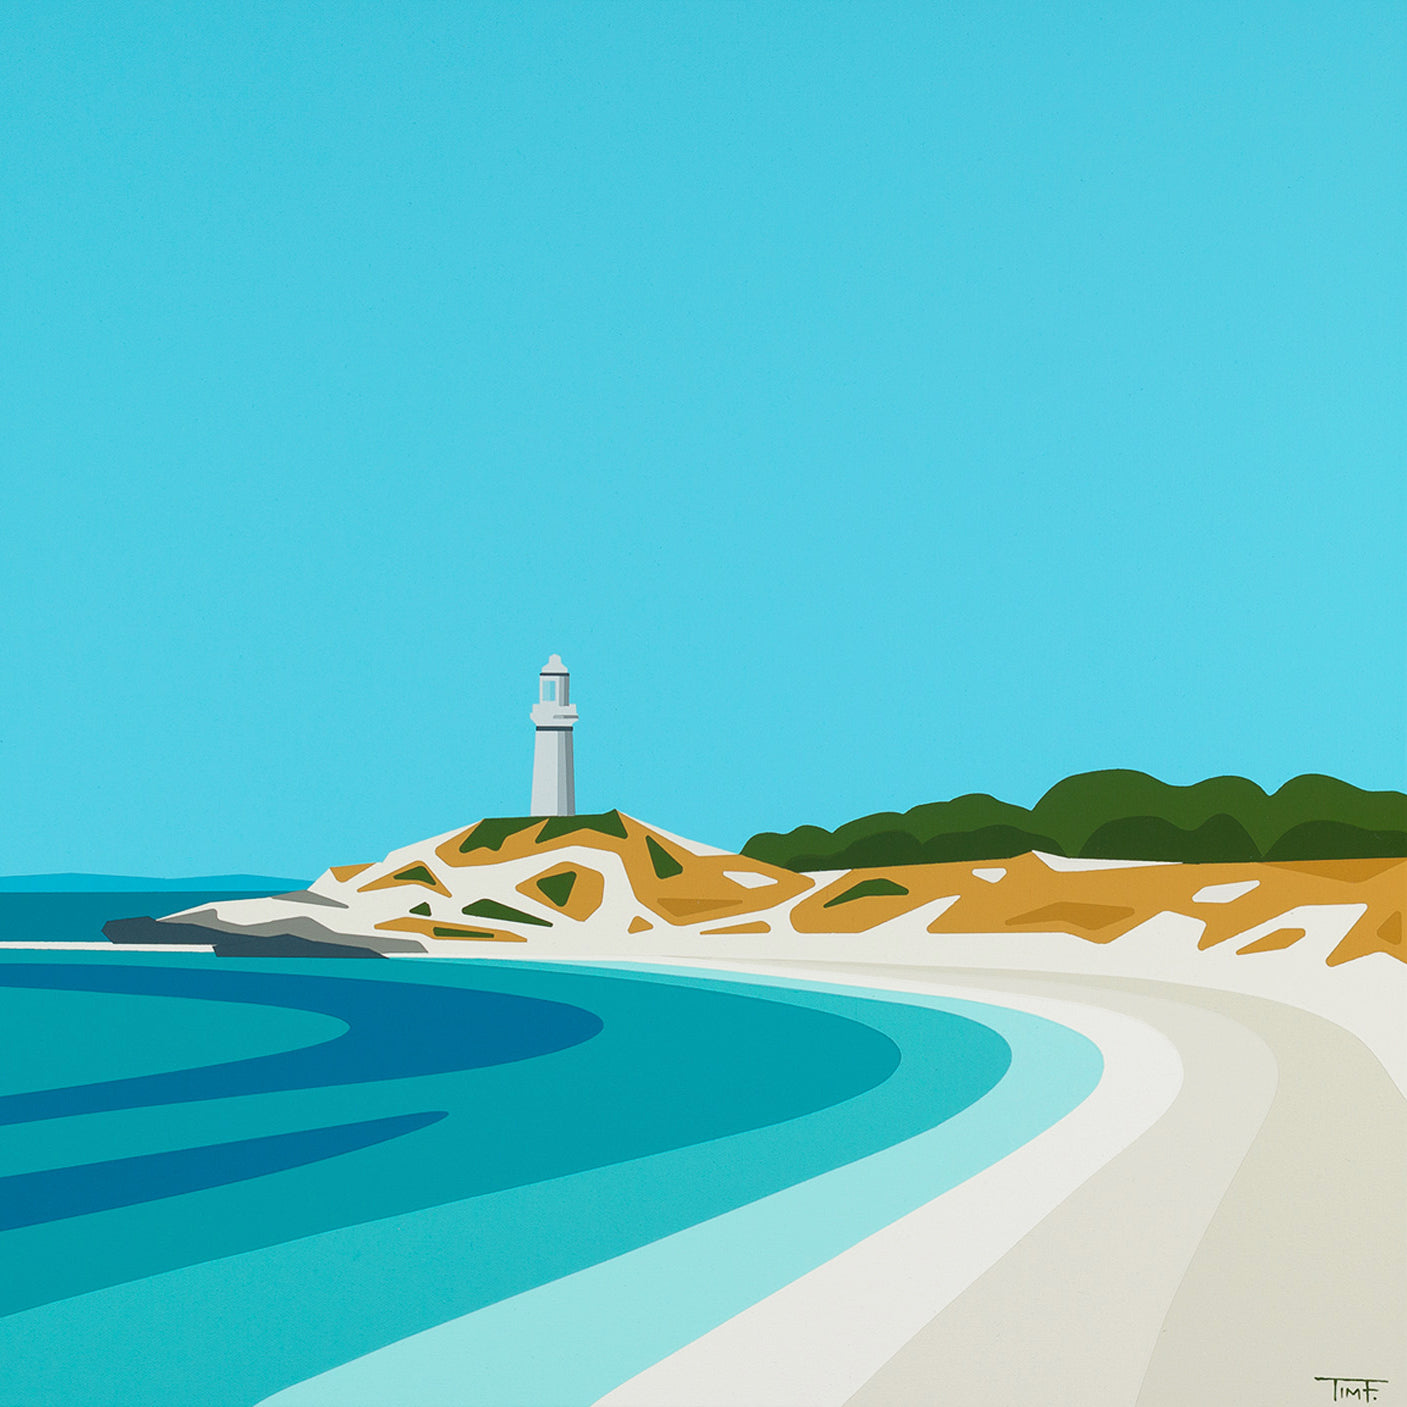 Pinky Beach, Rottnest Island, Western Australia - Limited Edition Print